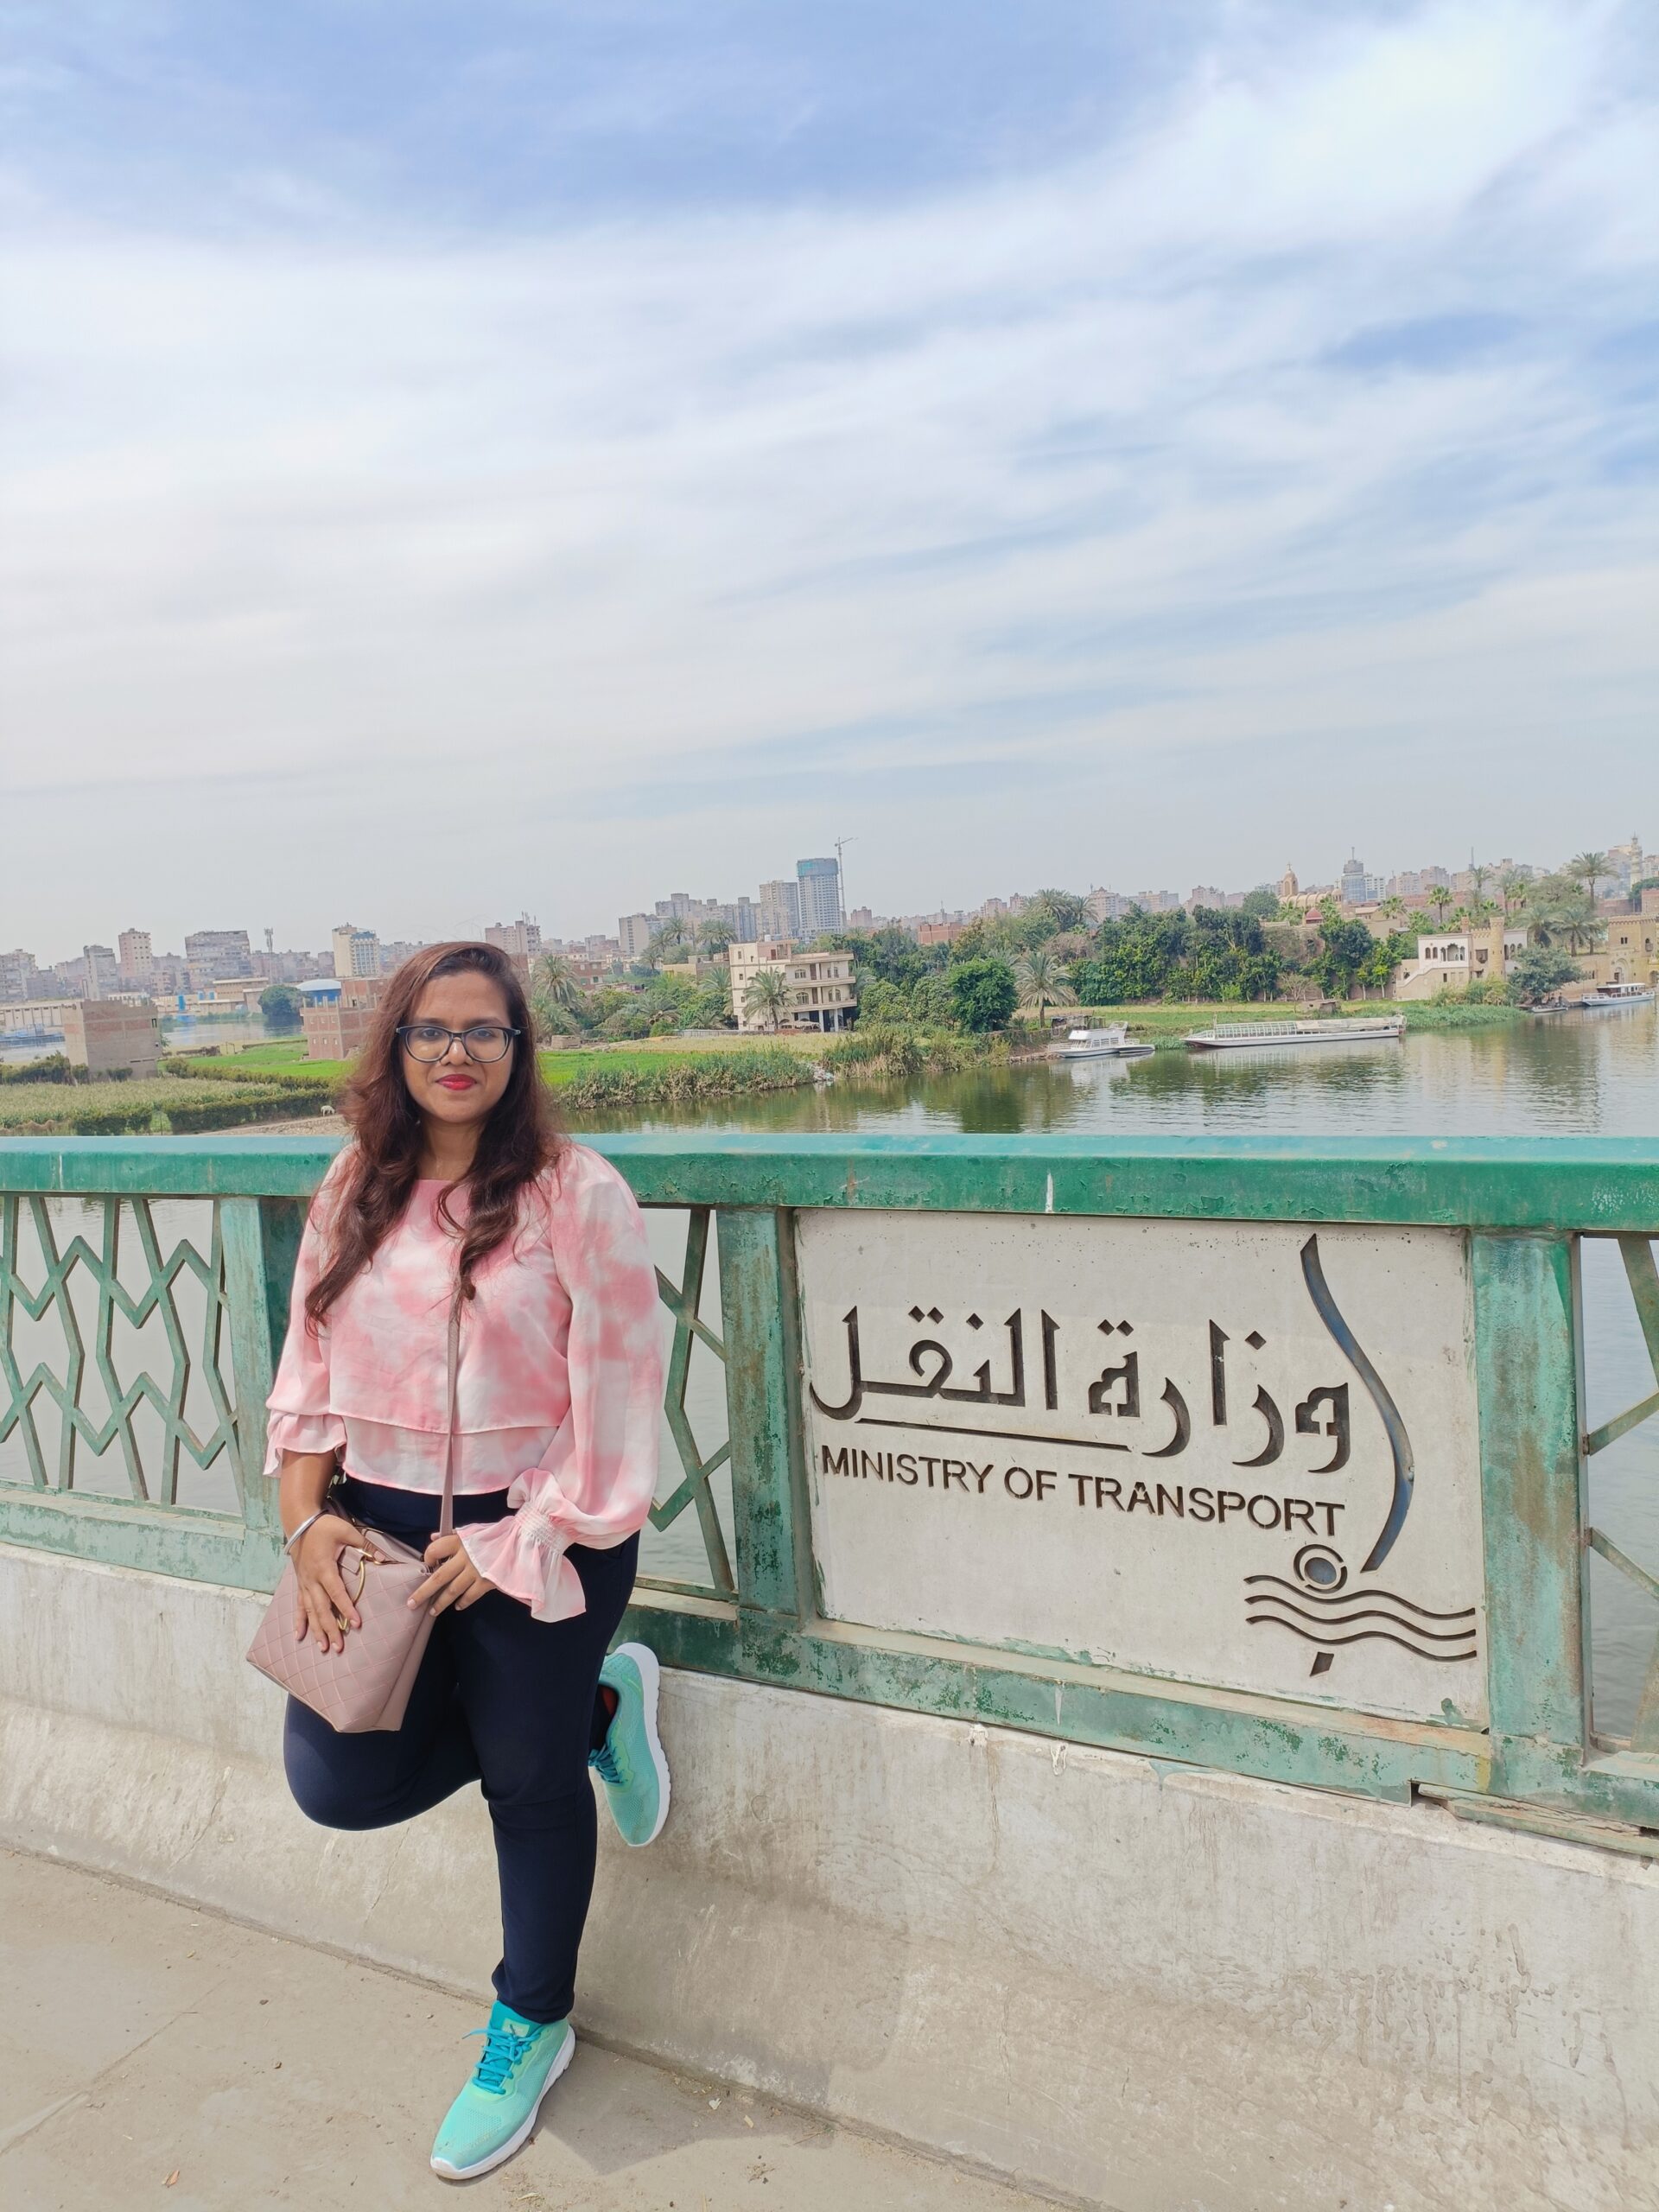 Nile River Egypt